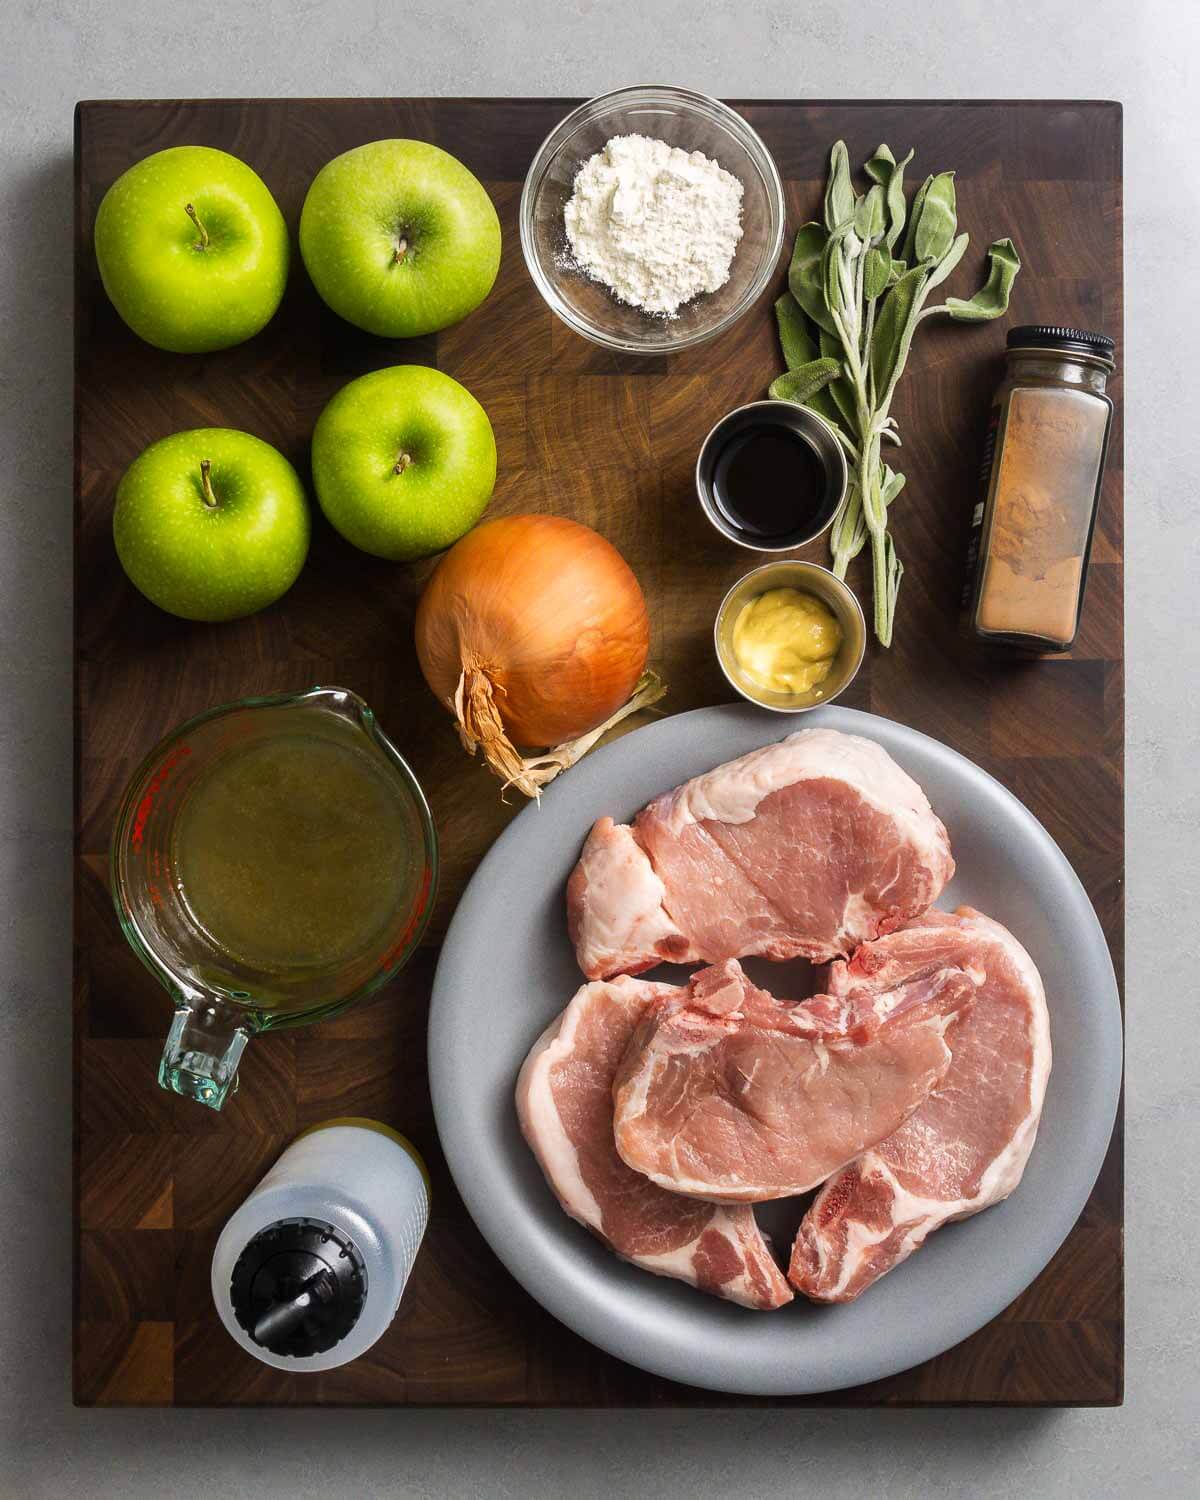 Ingredients shown: apples, flour, sage, balsamic vinegar, cinnamon, Dijon, onion, chicken stock, pork chops, and olive oil.